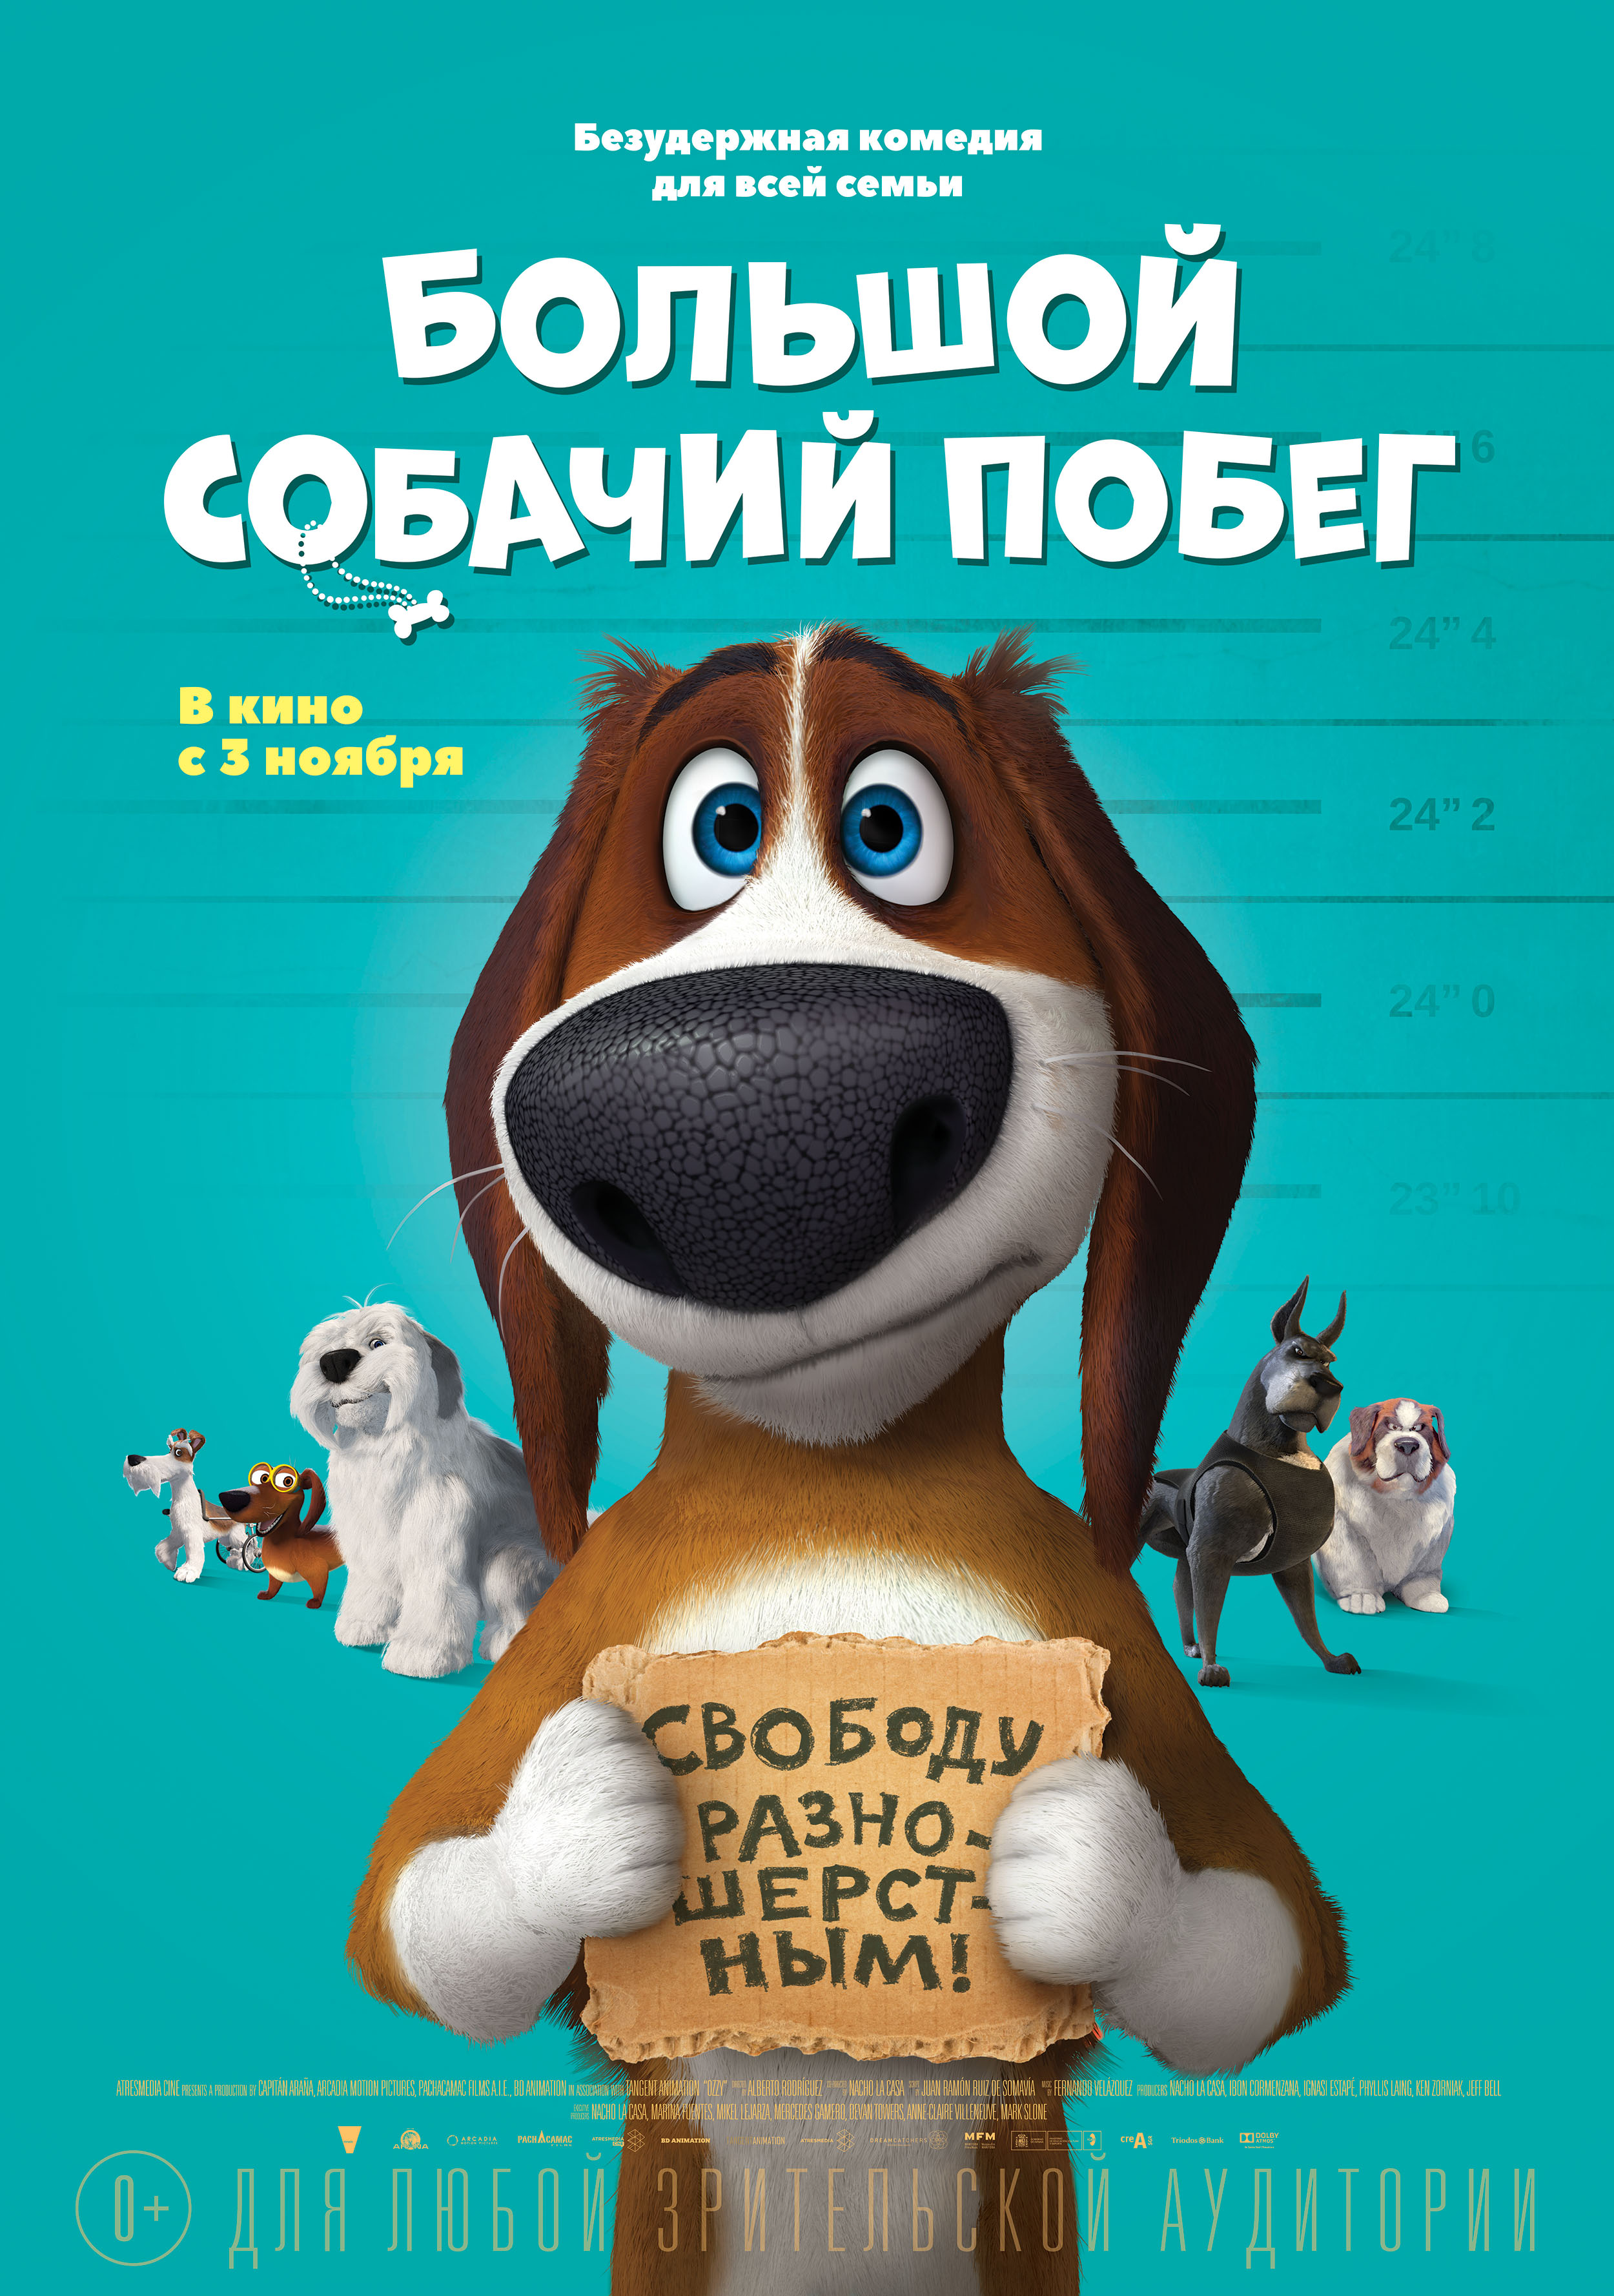 Постер - Большой собачий побег: 2500x3556 / 1579.96 Кб